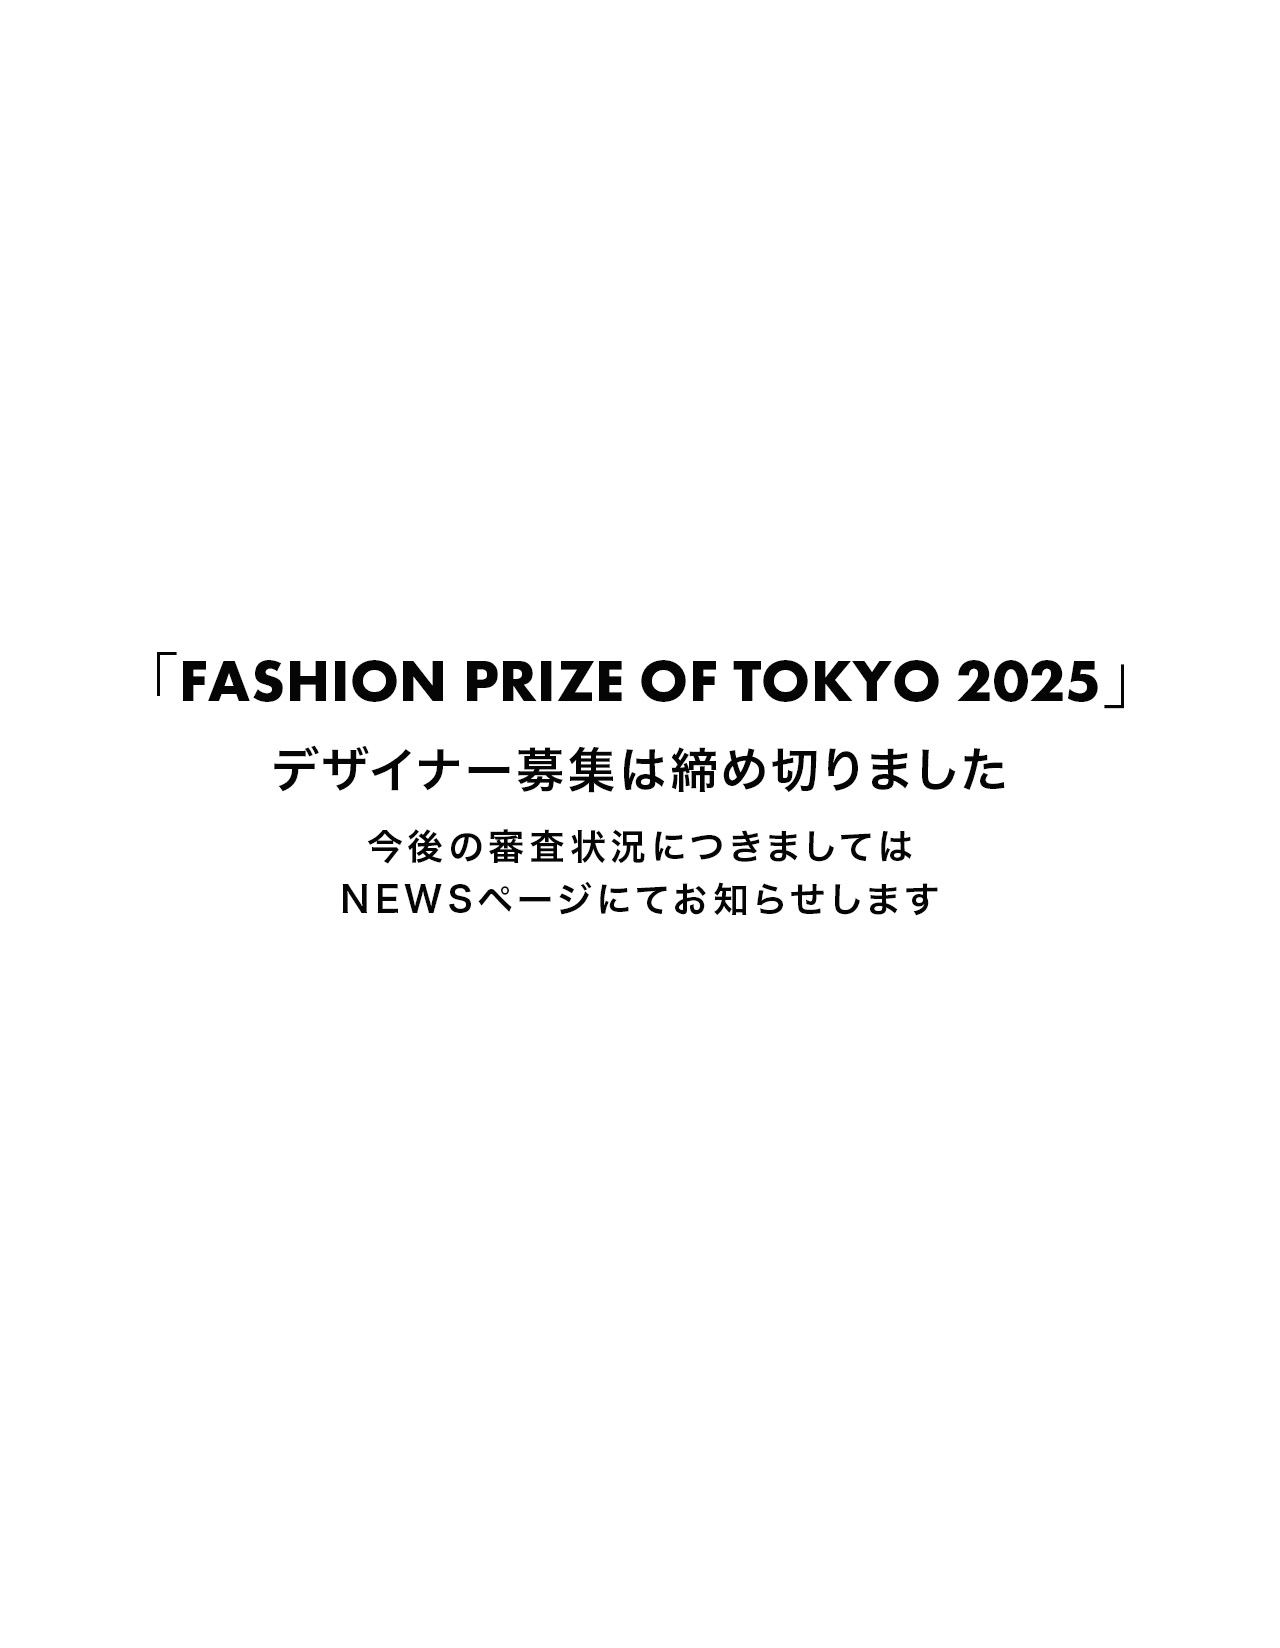 FASHION PRIZE OF TOKYO 2025 デザイナー募集開始のお知らせ